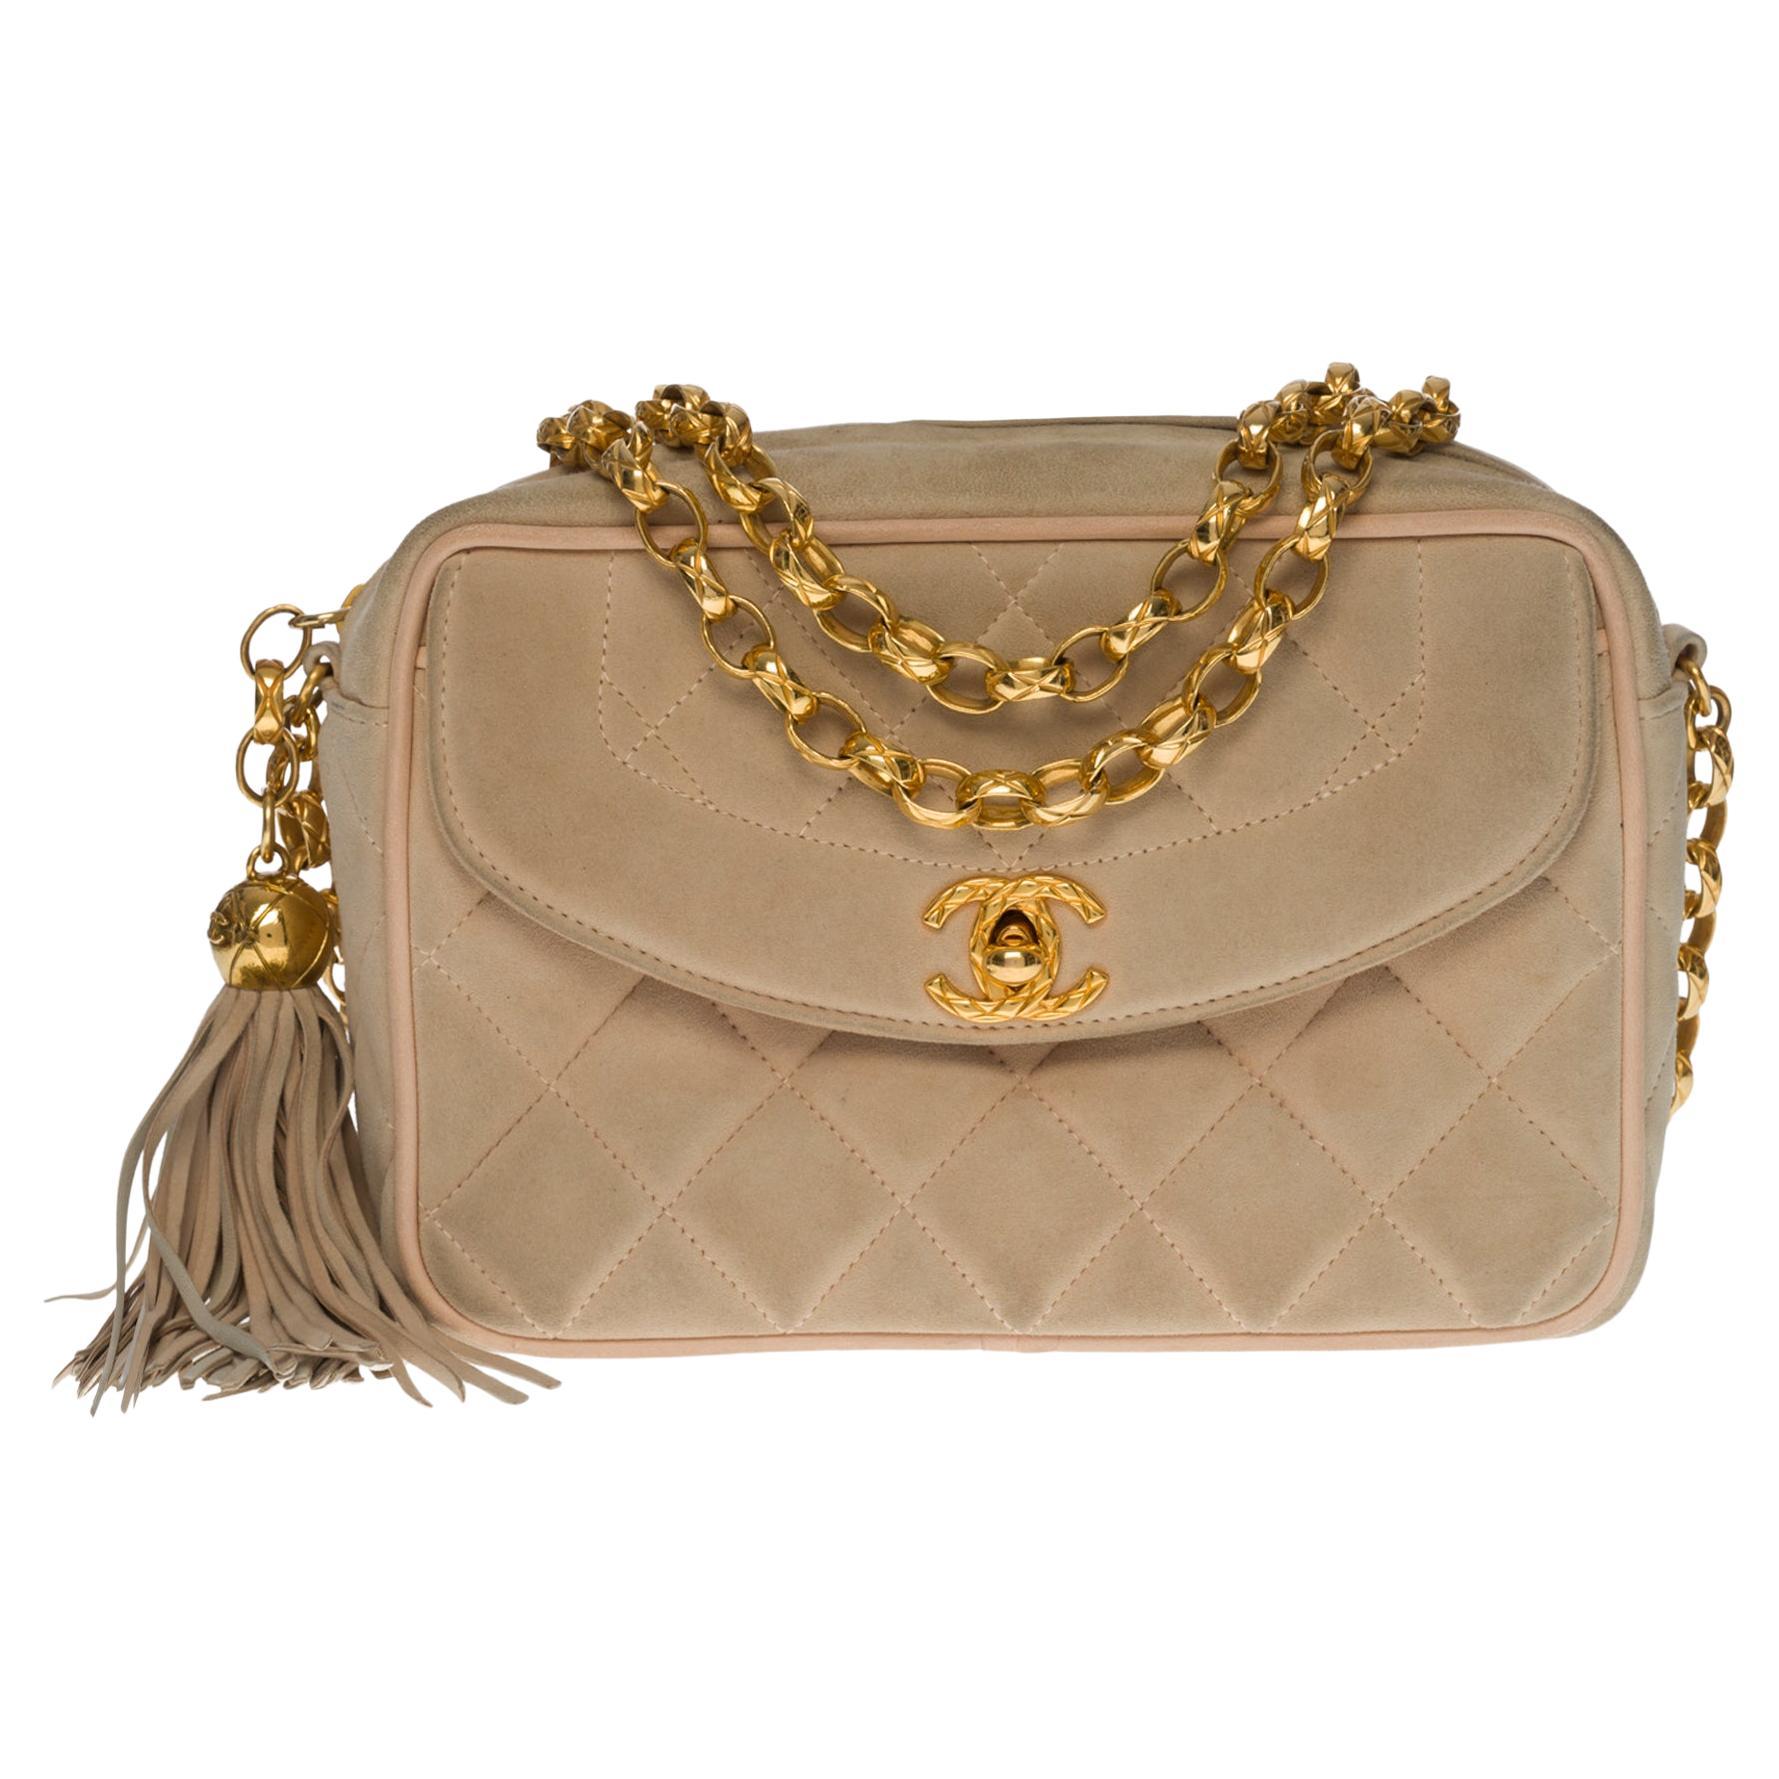 Amazing Chanel "Coco Crush" Mini Camera shoulder flap bag in beige suede, GHW